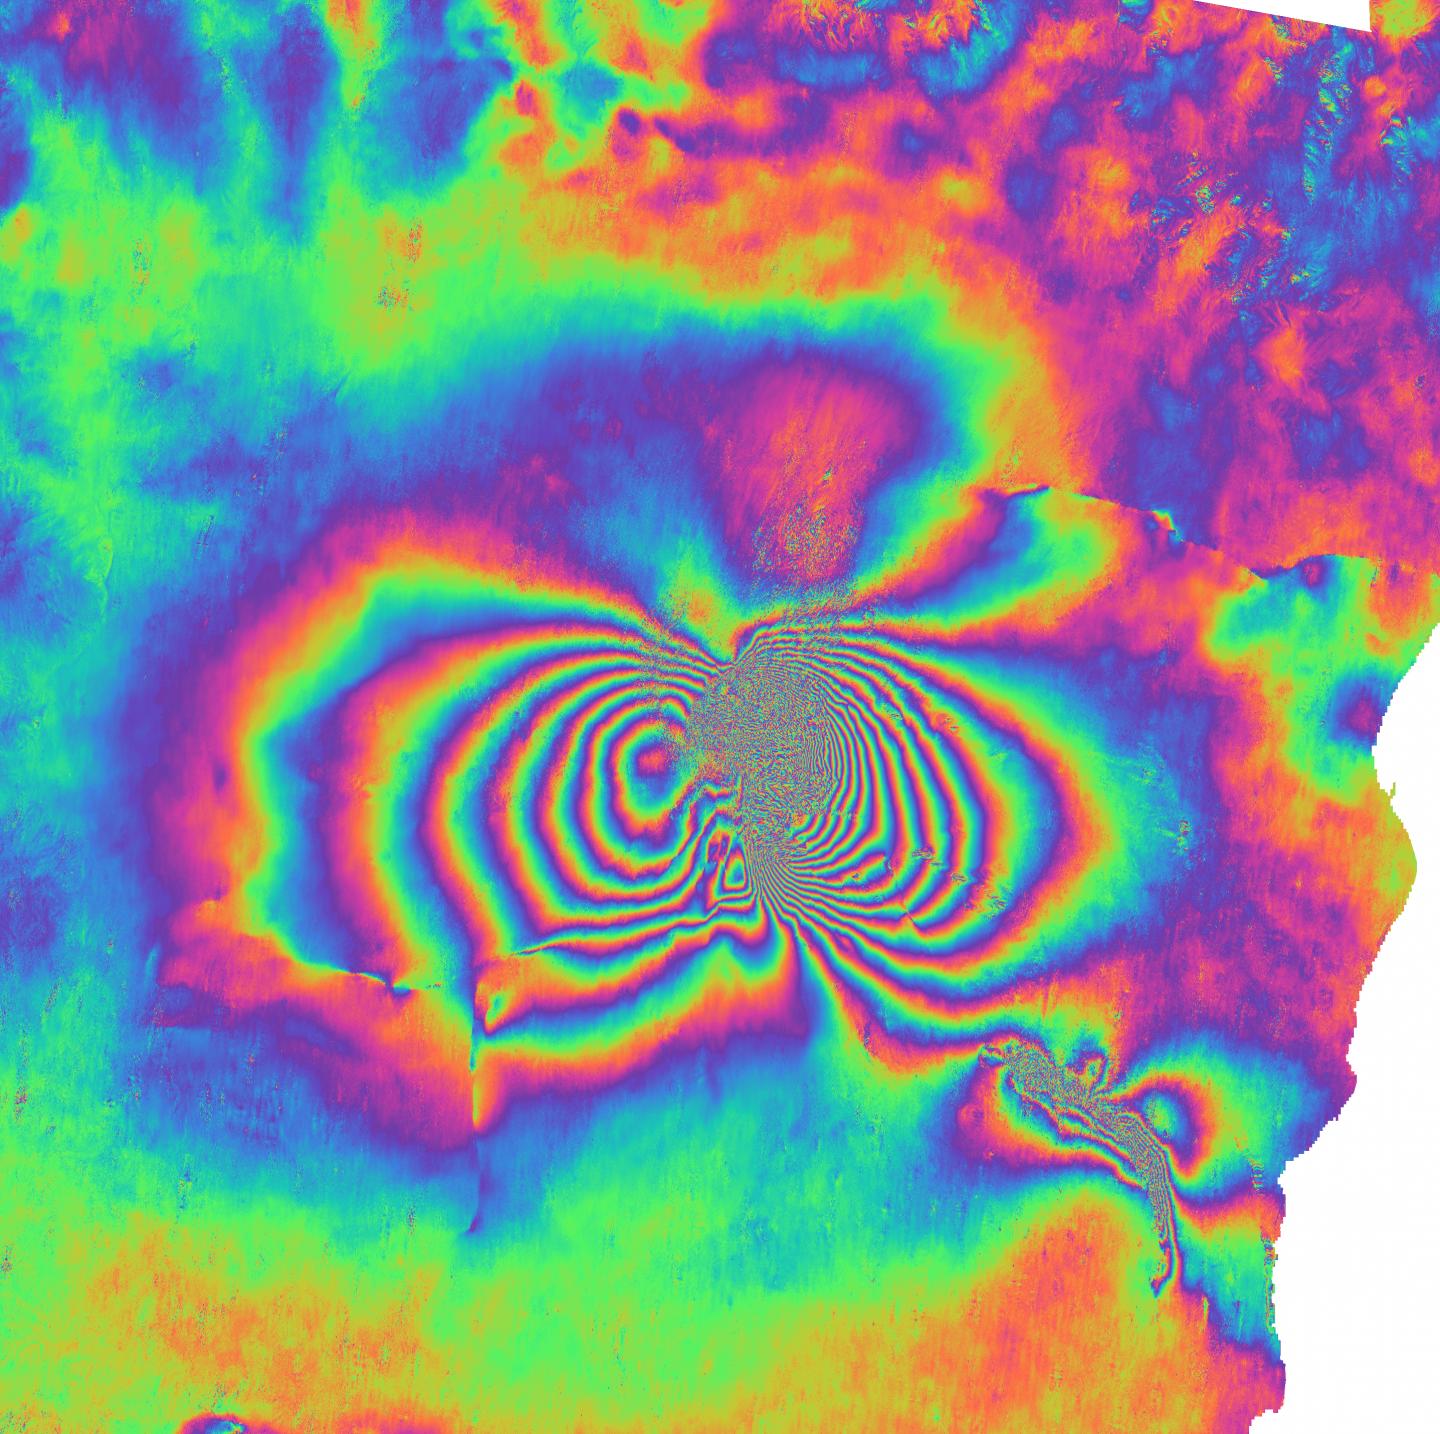 Interferogram of the December 2018 Eruption of Etna